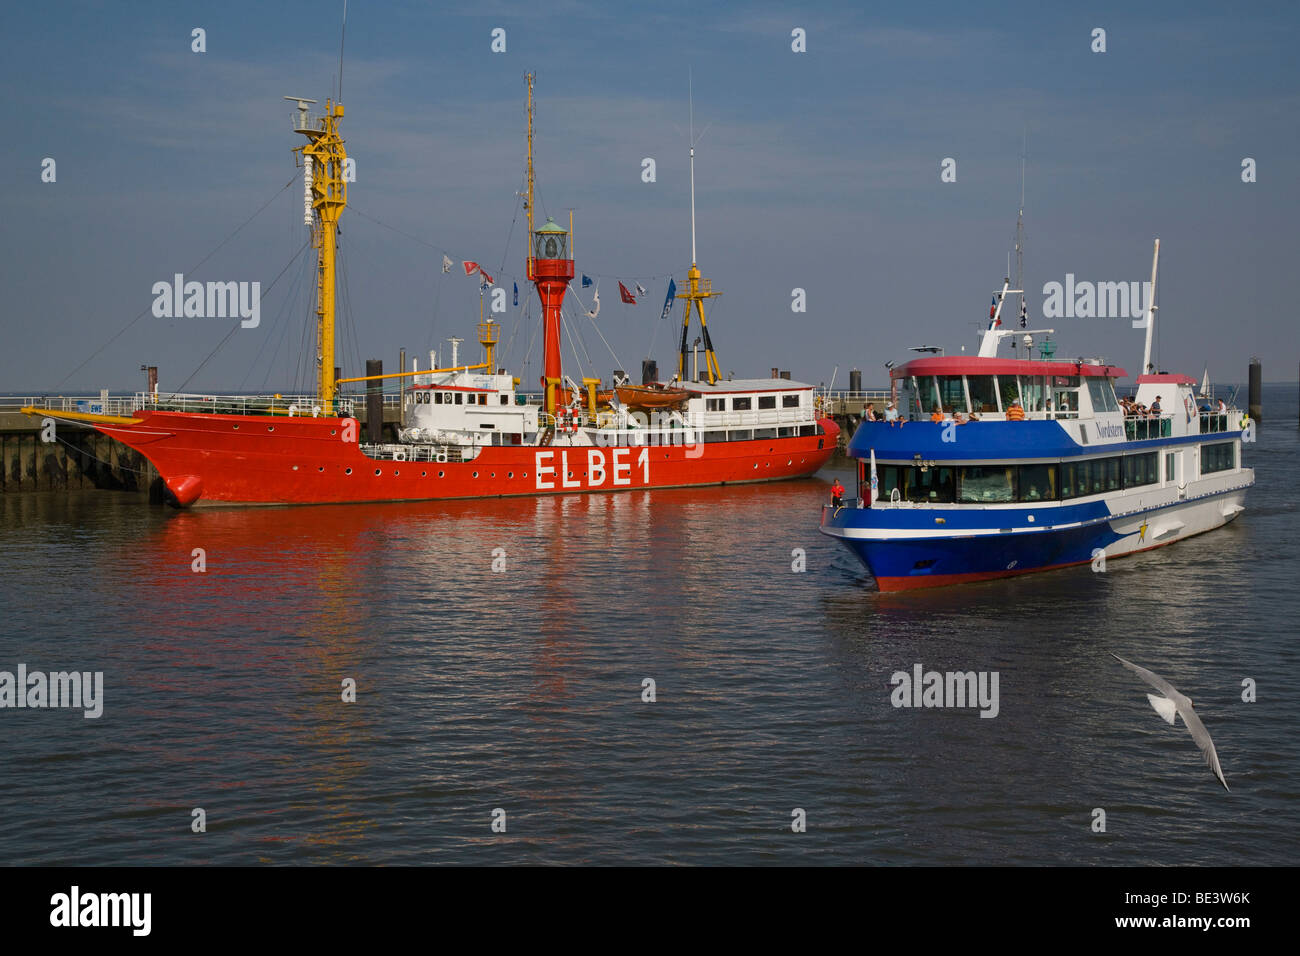 Germania, Niedersachsen, Cuxhaven, Feuerschiff Elba 1, Bürgermeister O'Swald II e l'Elba traghetto Nordstern a Cuxhaven porto. Foto Stock